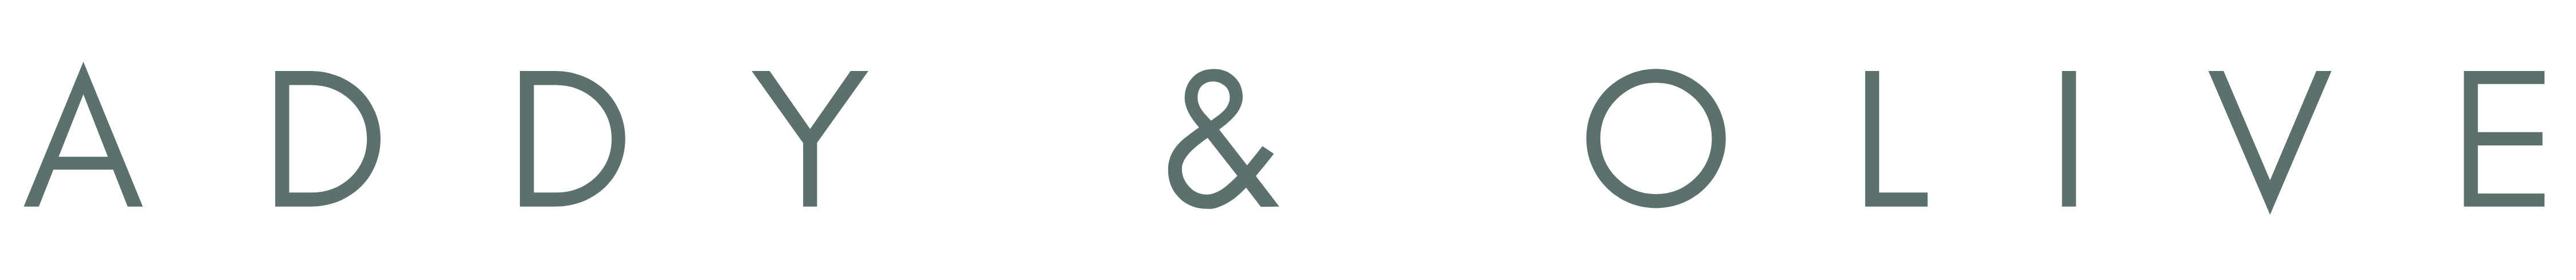 addy & olive logo